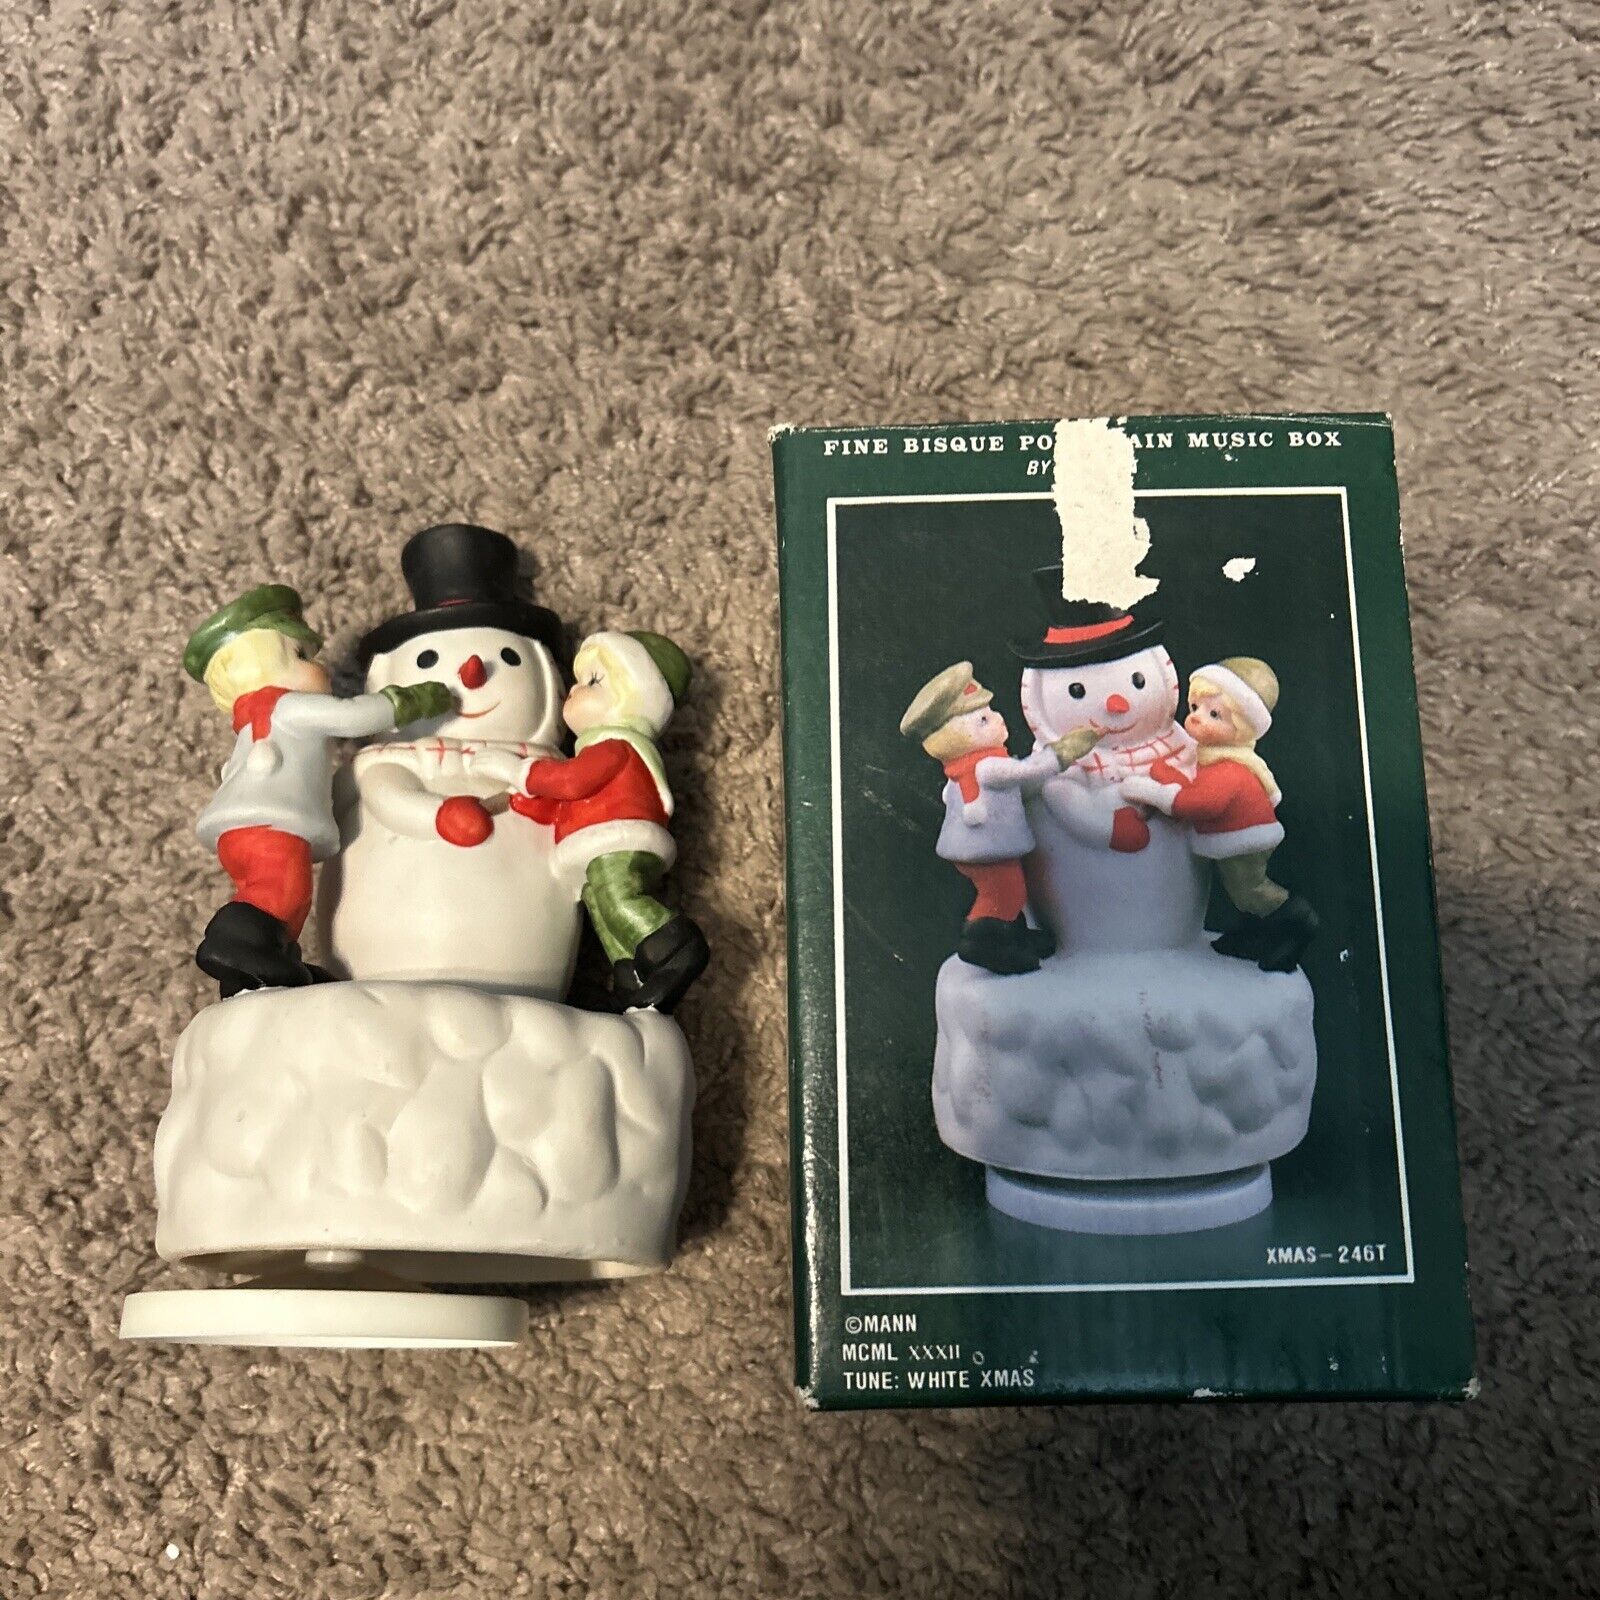 1982 Vintage Music Box Figurine Snowman White Christmas Taiwan XMAS 246T